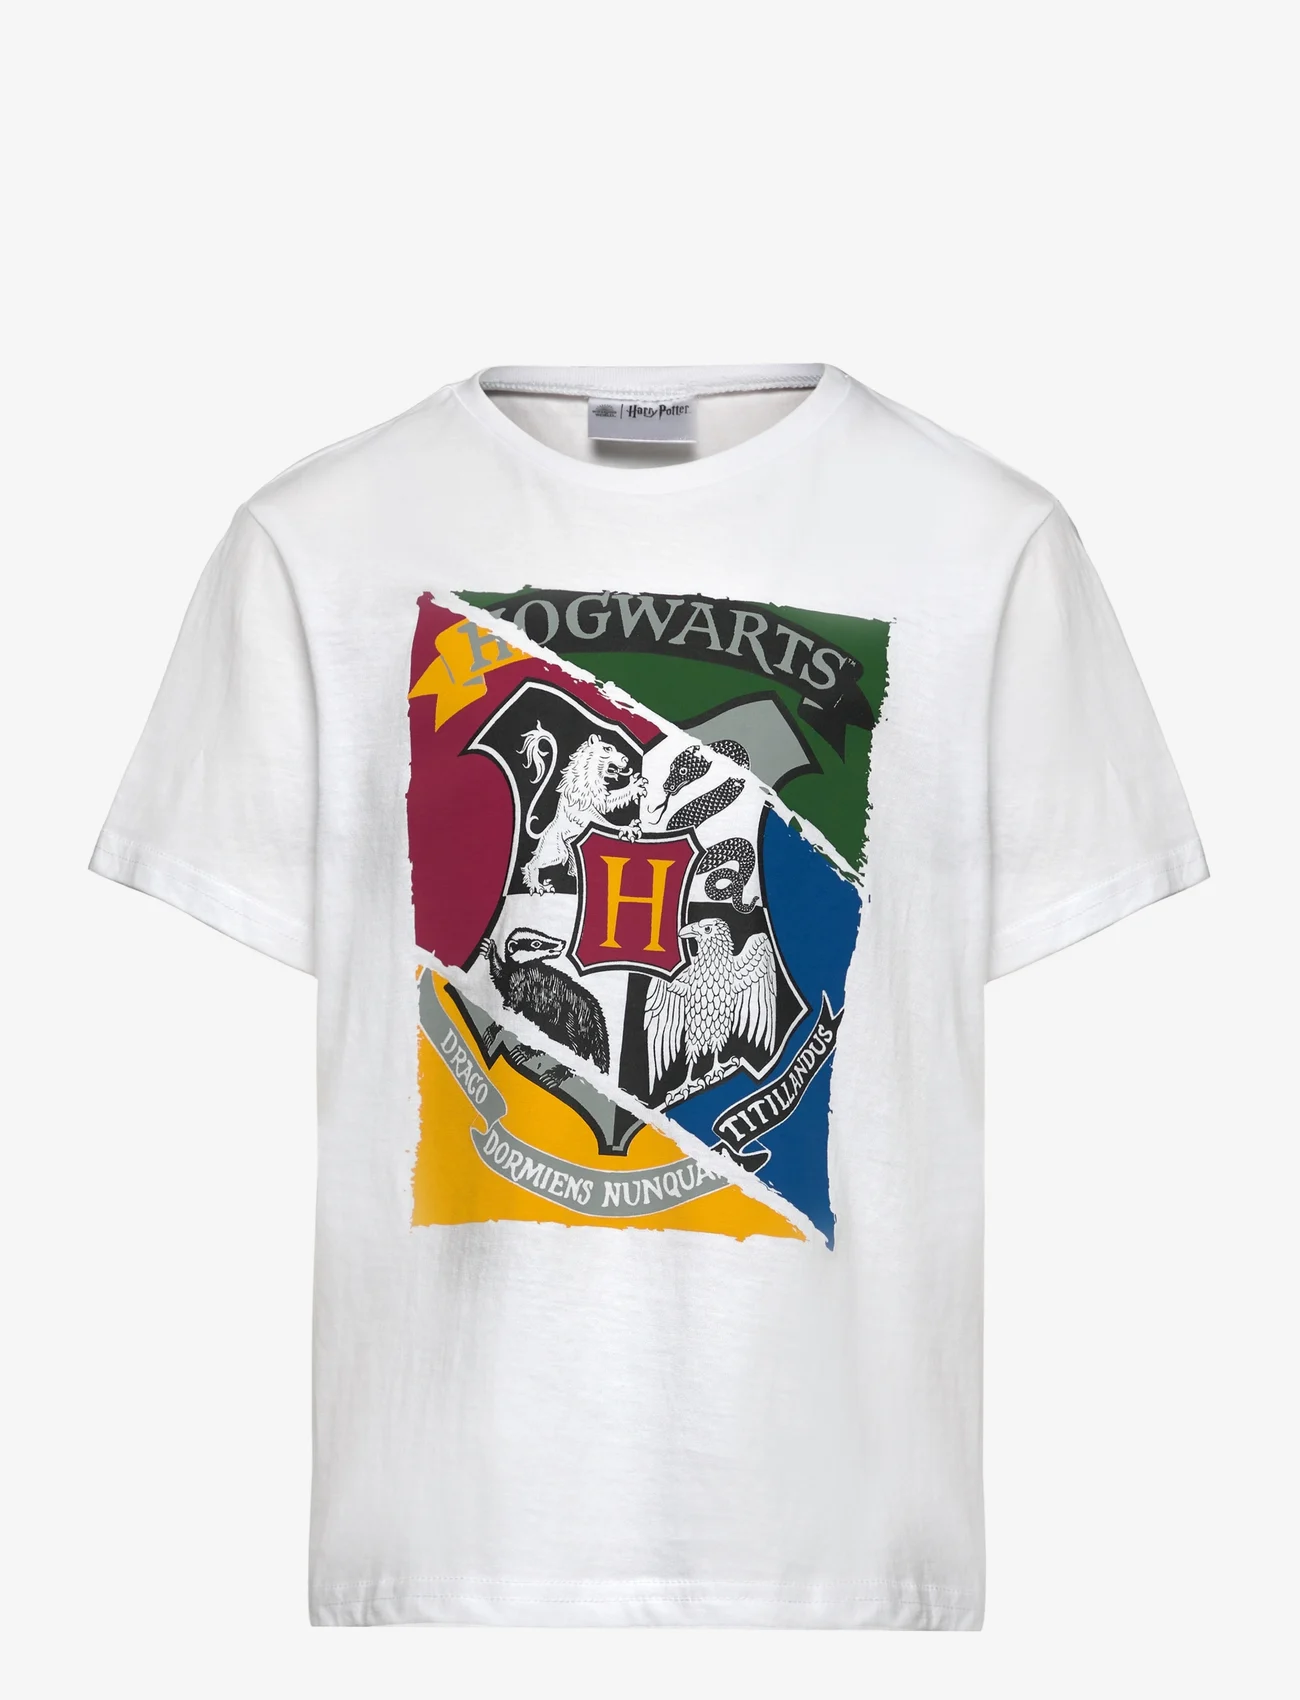 Harry Potter - SHORT-SLEEVED T-SHIRT - short-sleeved t-shirts - white - 0